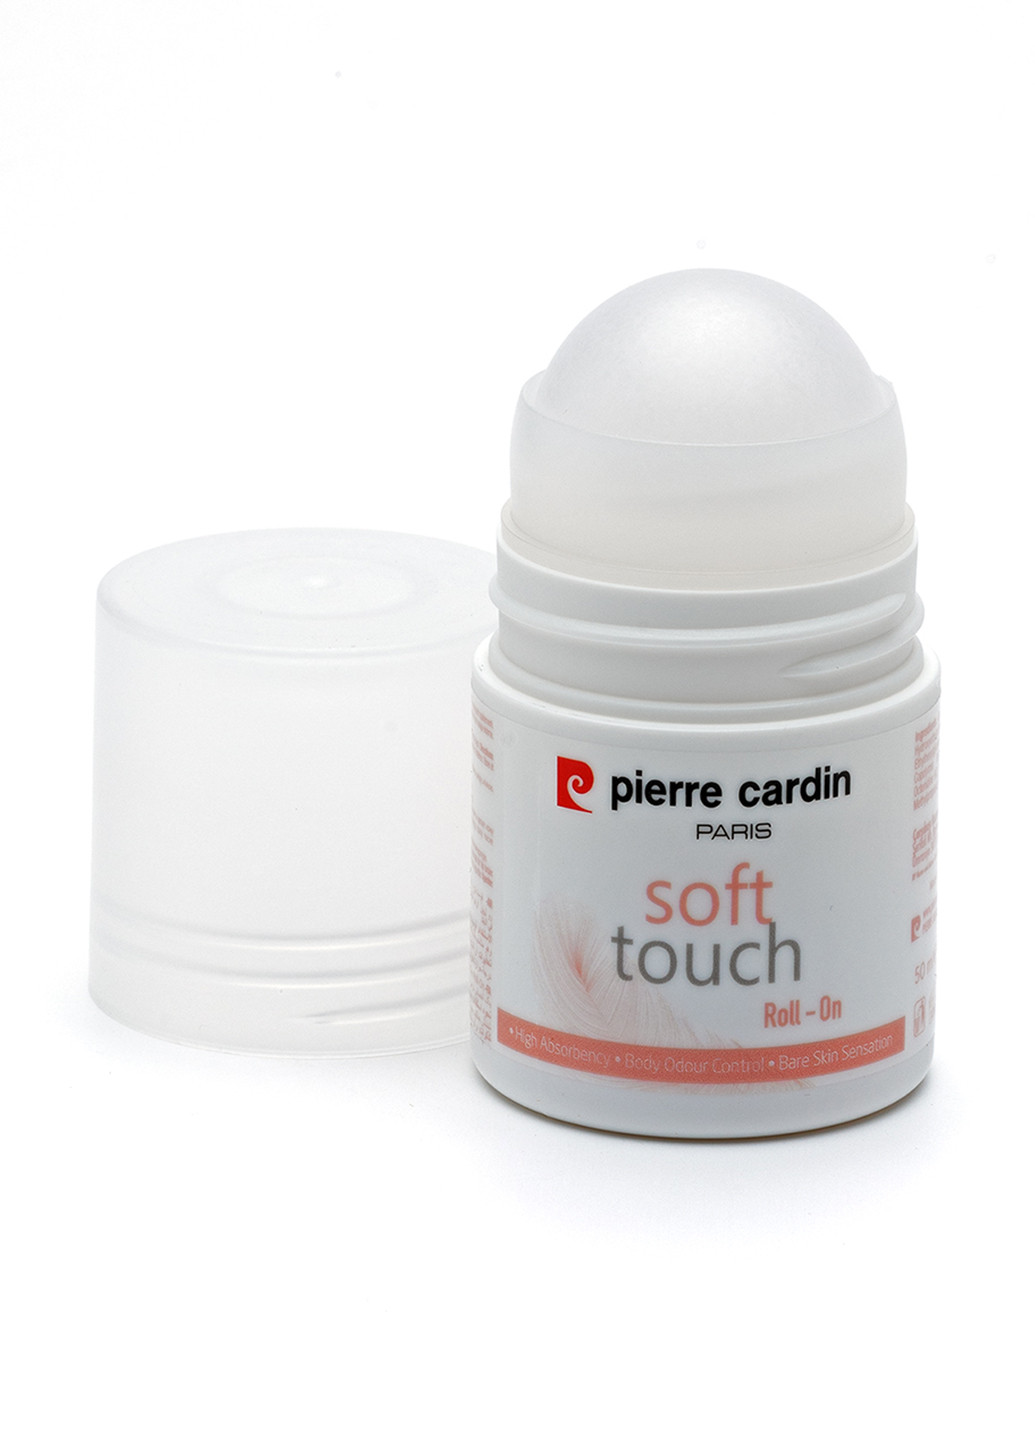 Дезодорант Soft touch, 50 мл Pierre Cardin